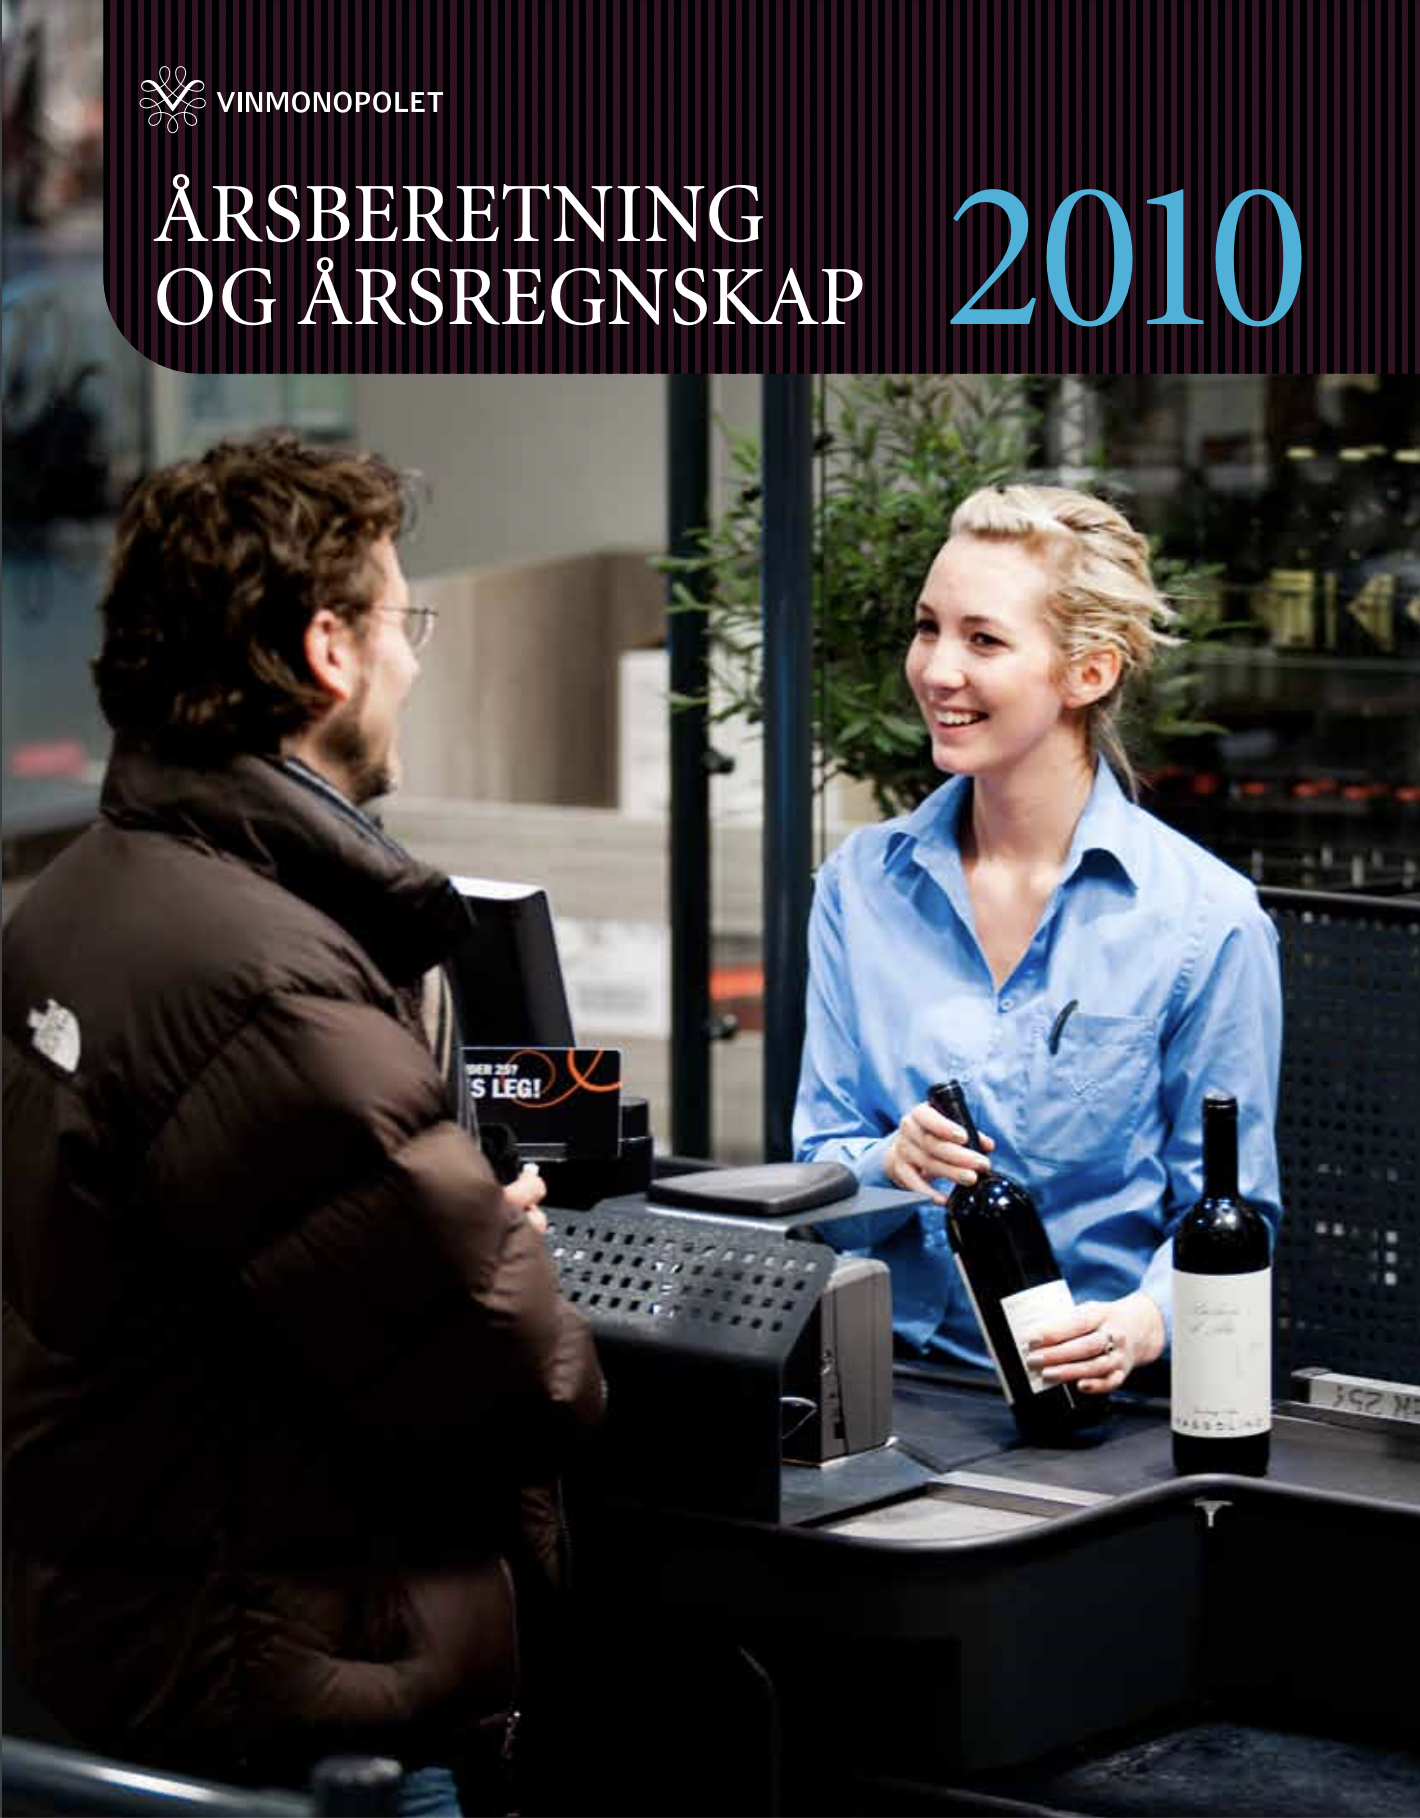 Årsberetning og årsregnskap 2010